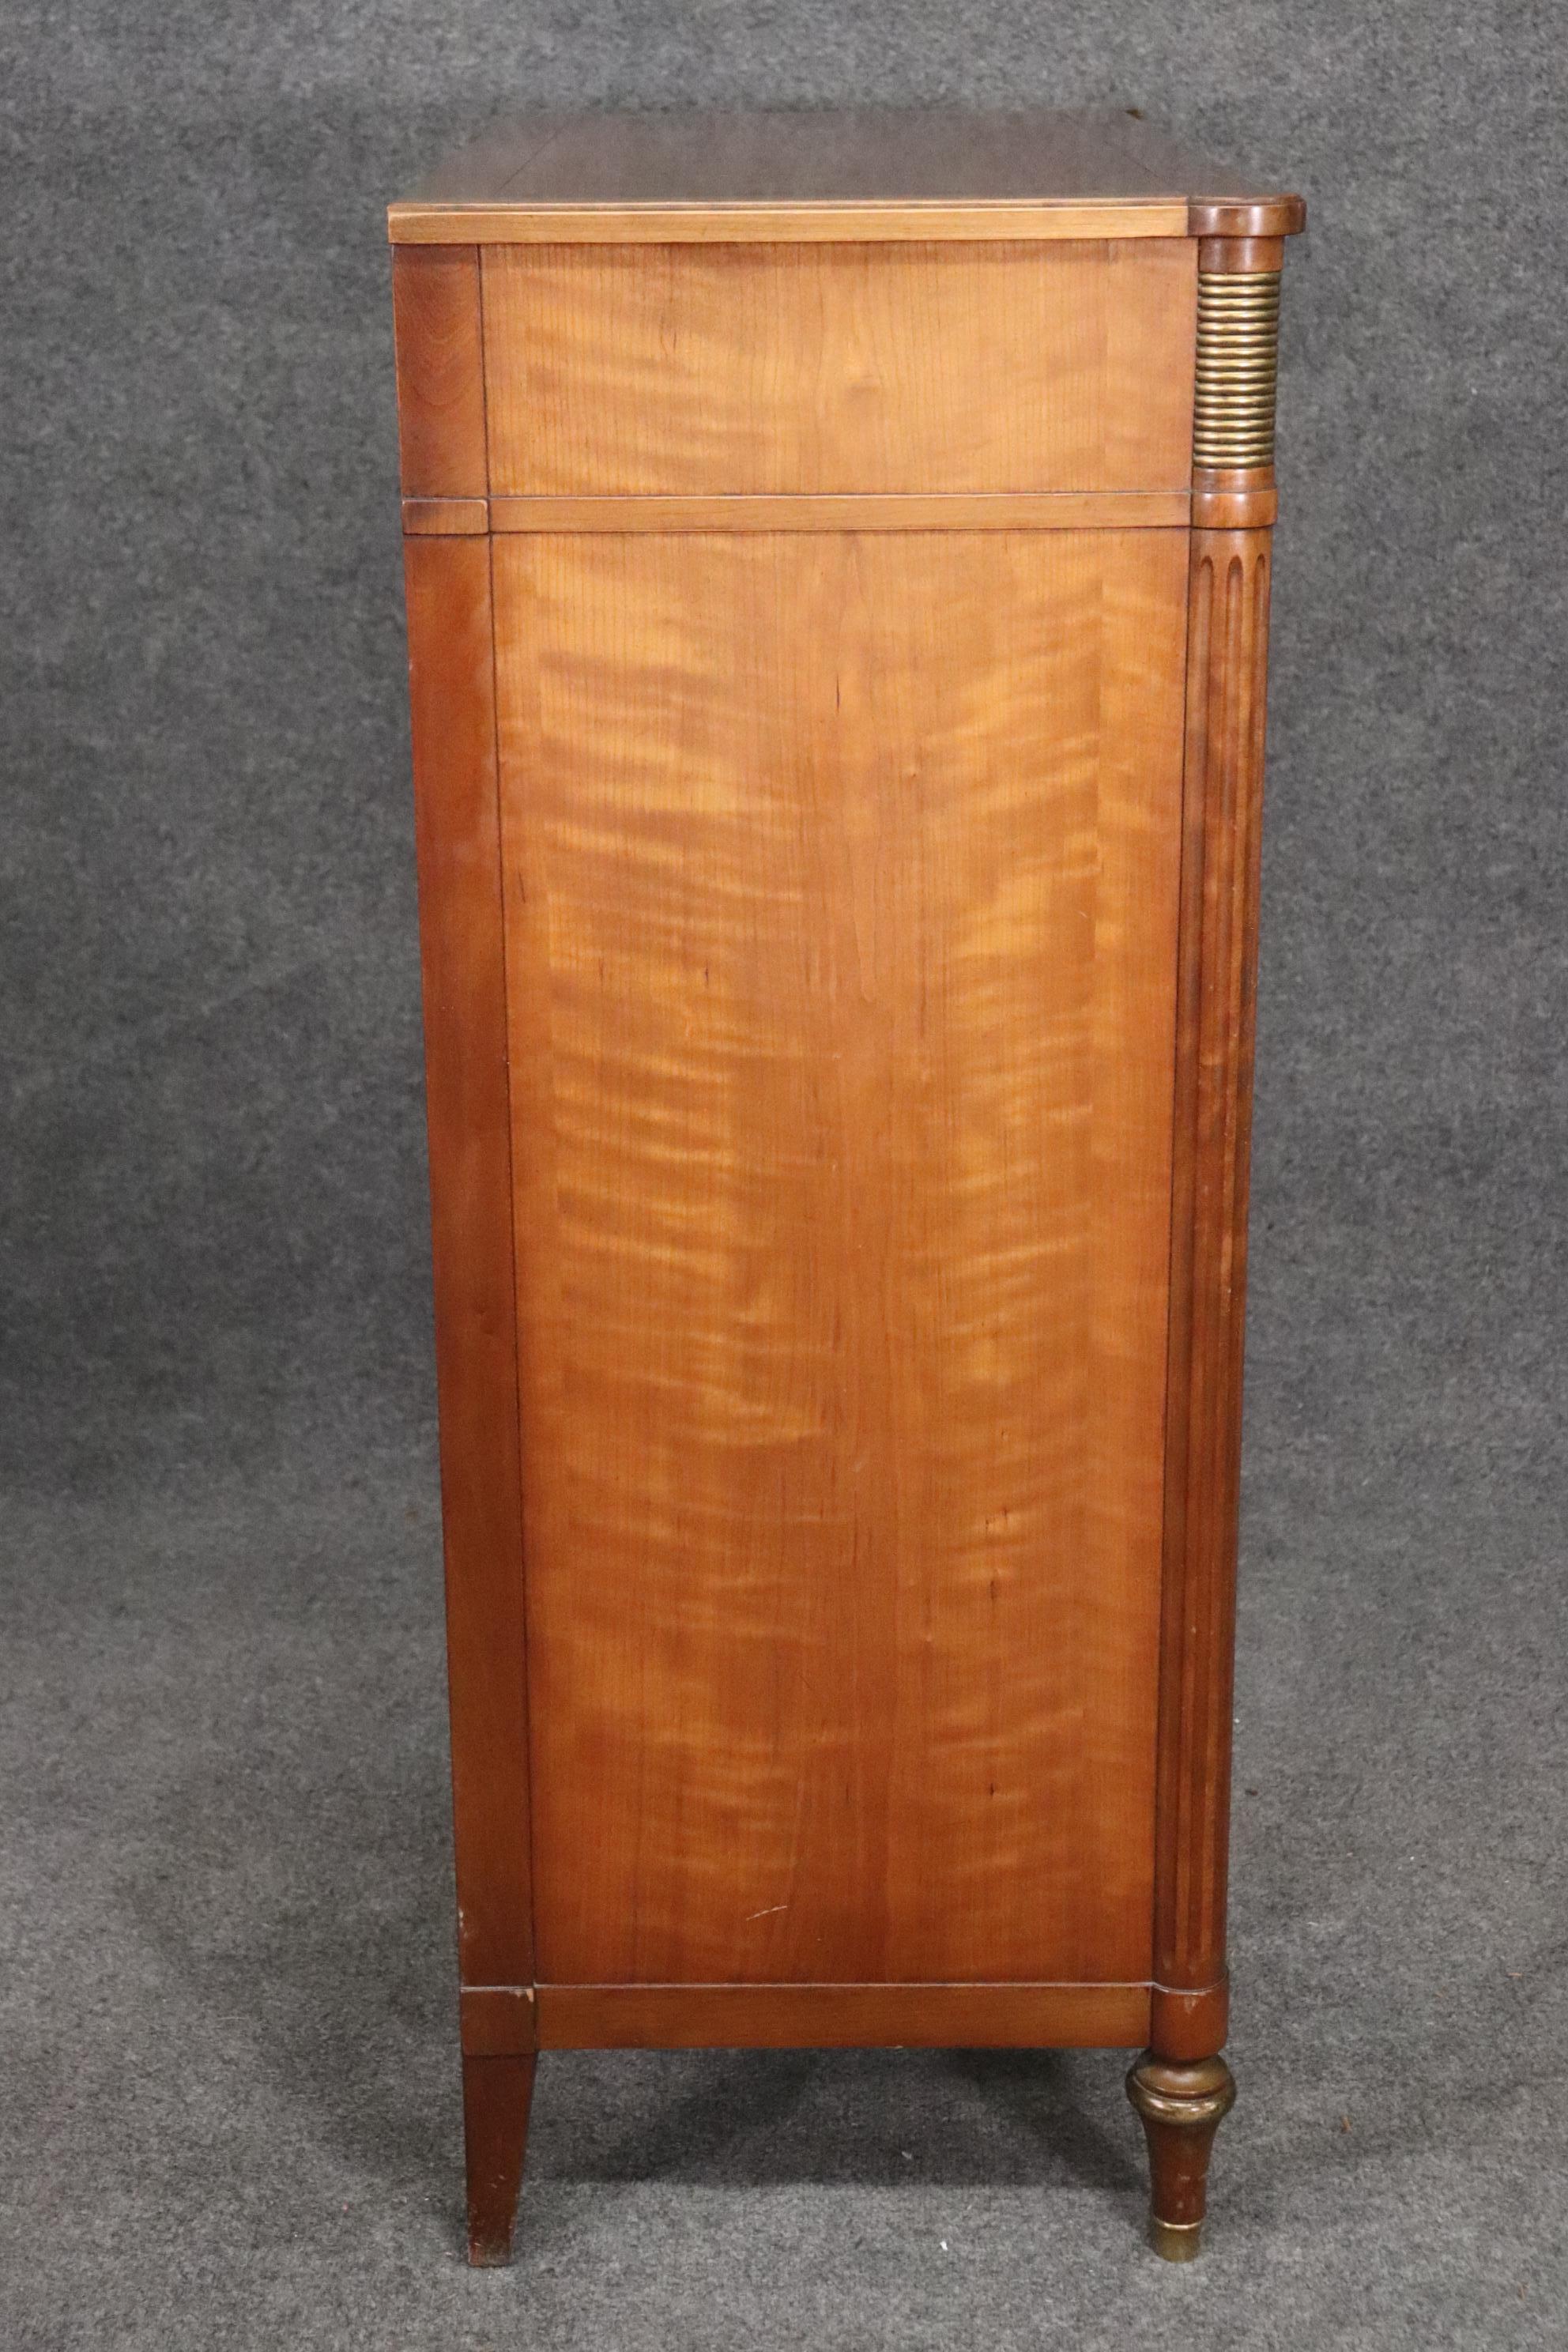 Mid-20th Century Solid Cherry Kindel Belvedere Dresser Tall Chest with Tambor Doors